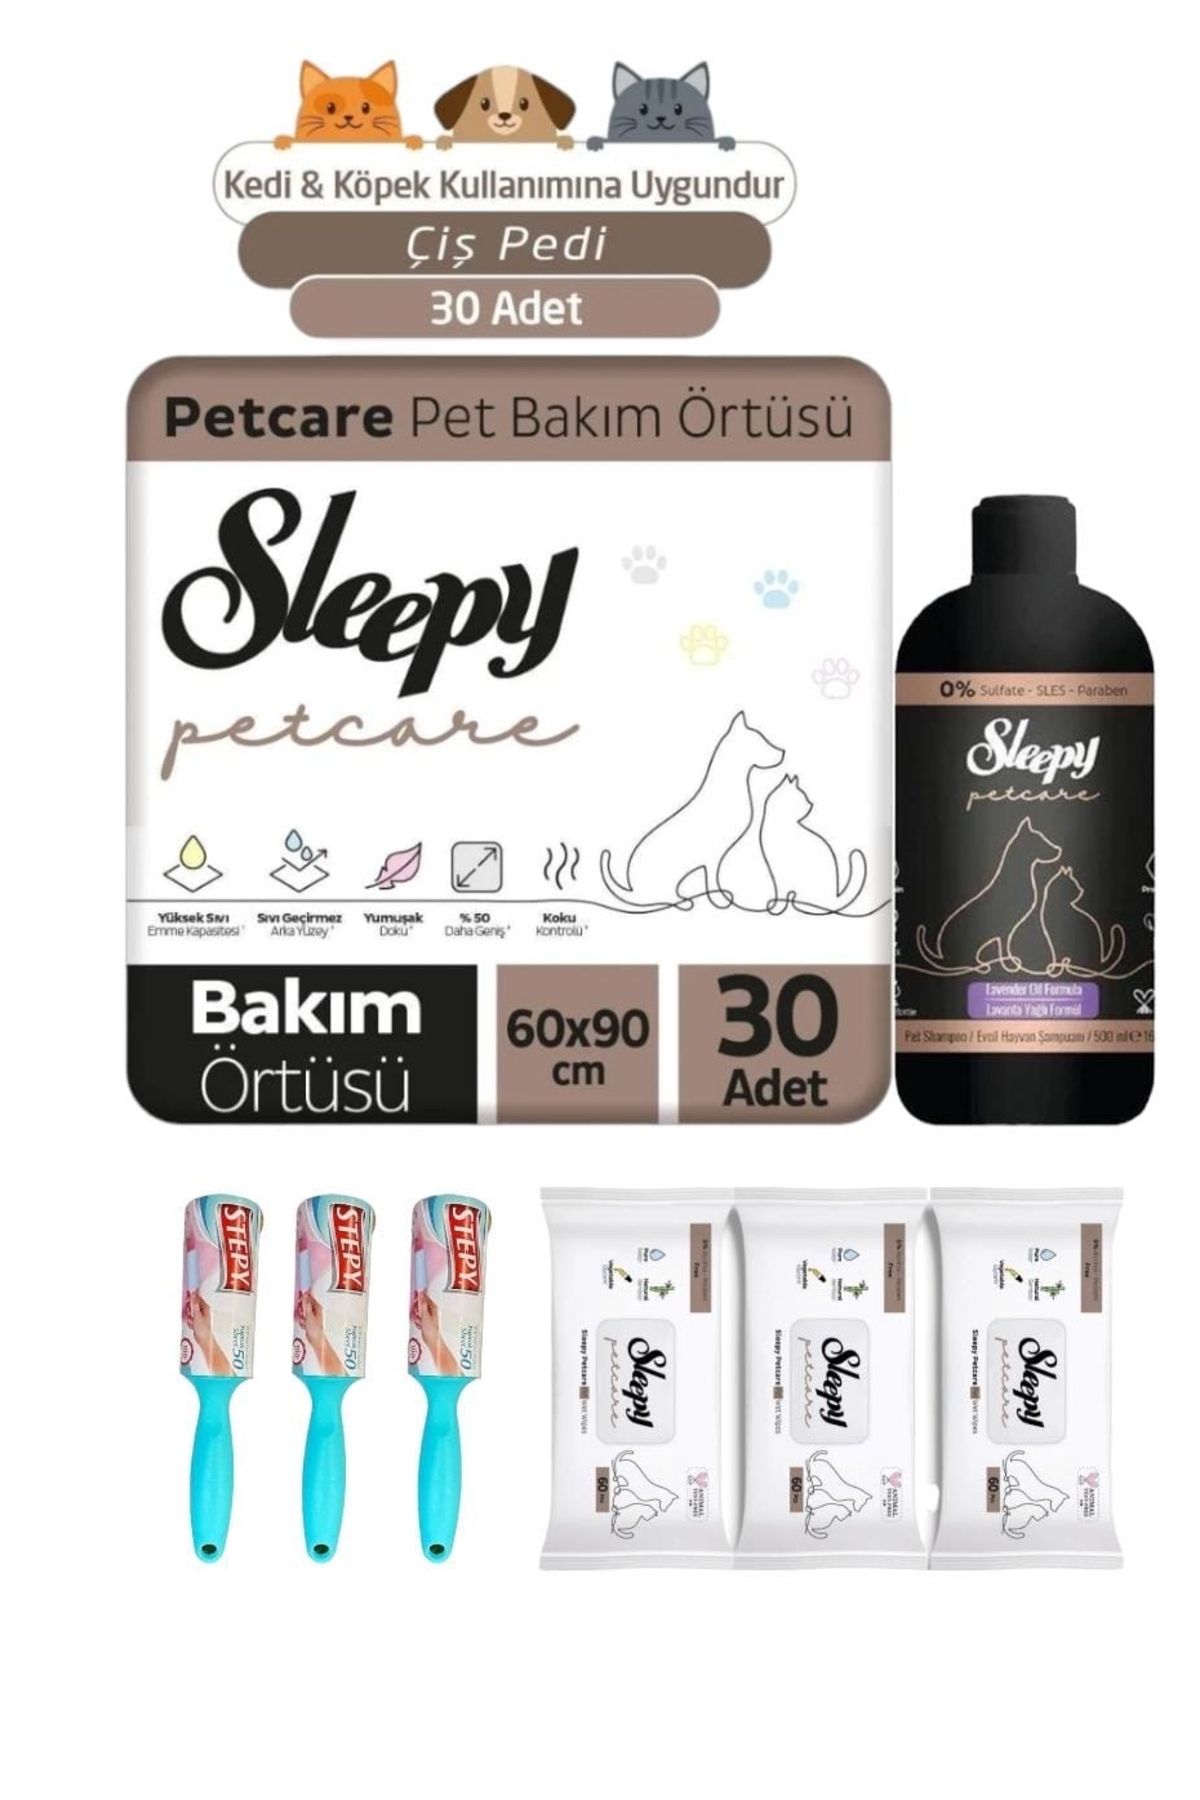 Sleepy Çiş Pedi 60x90 Pet Temizlik Mendili Evcil Hayvan Şampuanı 500 ml Stepy Tüy Toplama 3 Adet